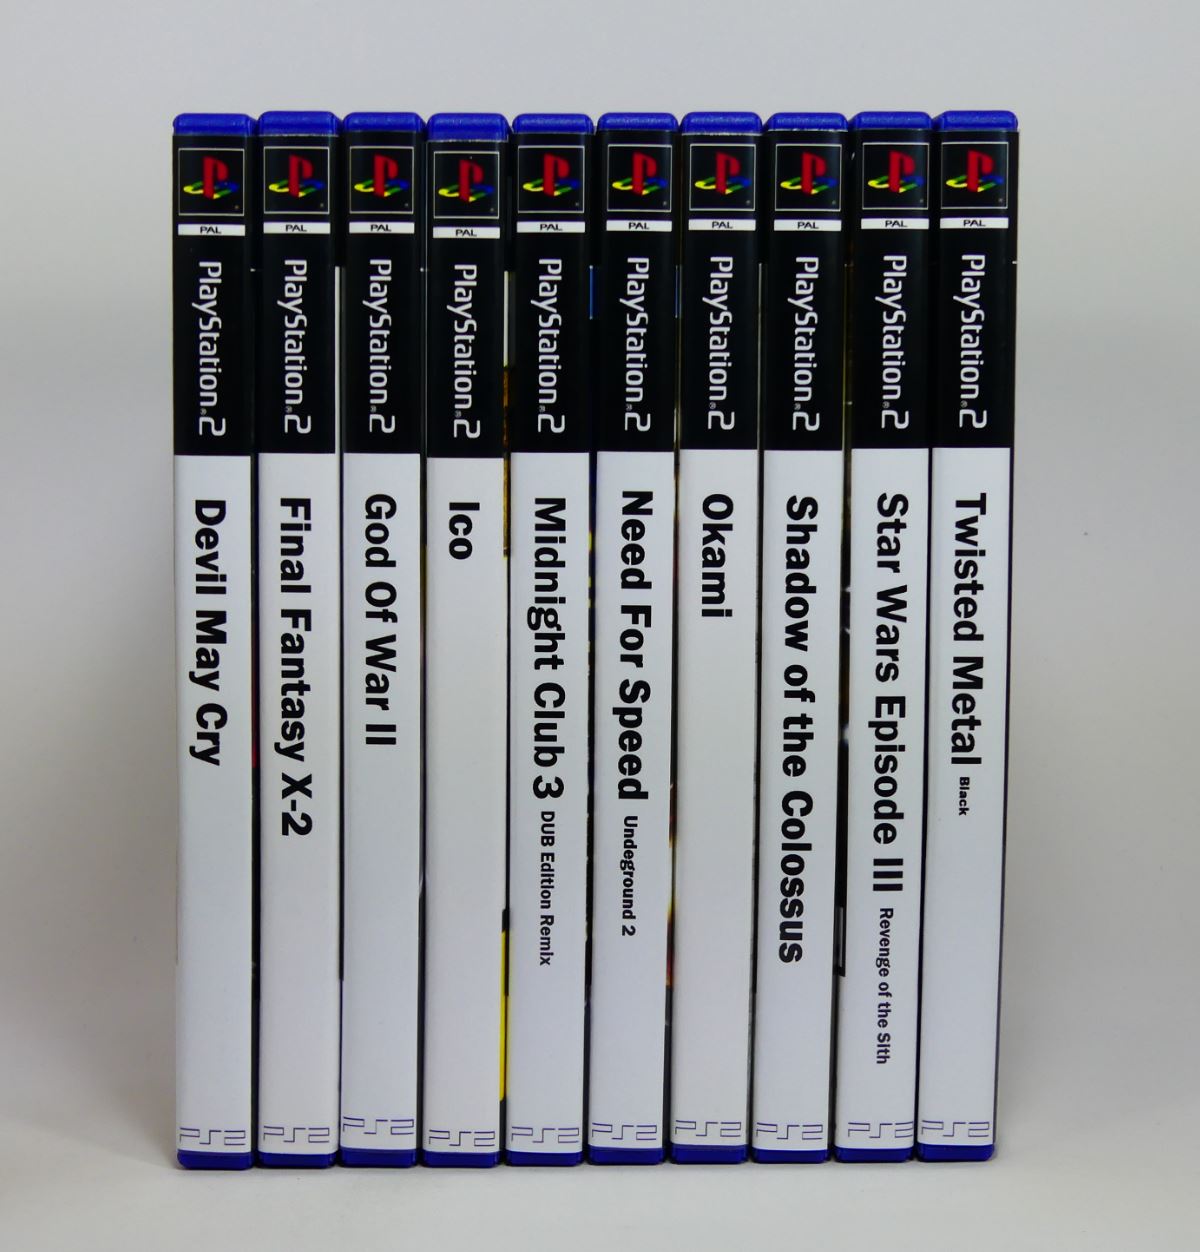 Gran Turismo 4 - PS2 Replacement Case